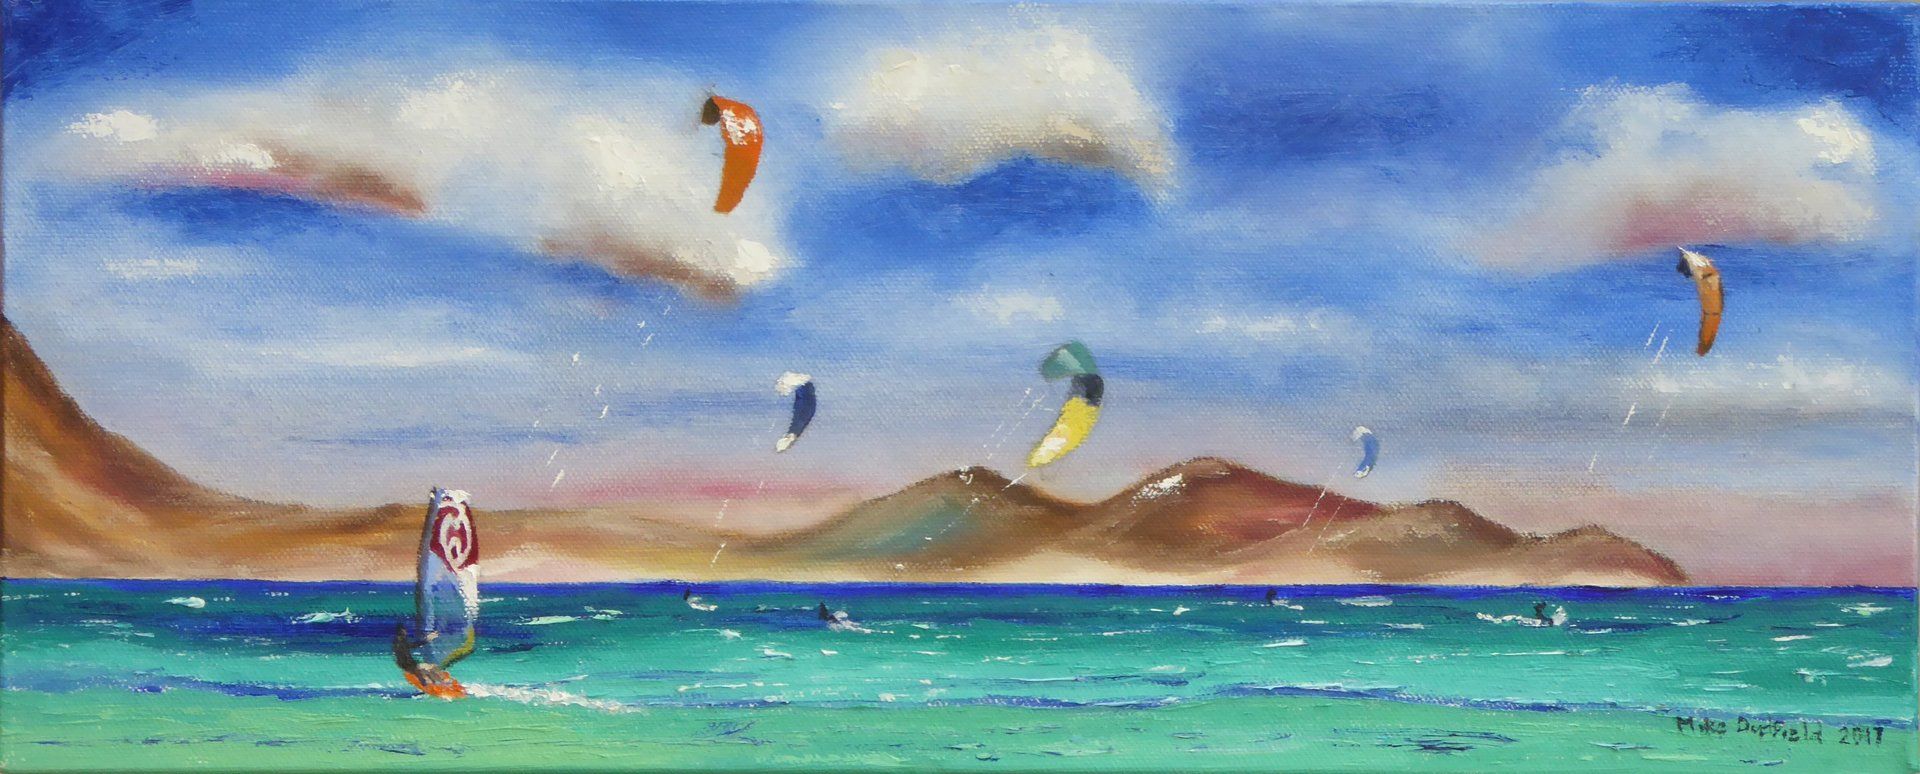 Painting windsufers and kitesurfers  off Flag Beach with Lobos.